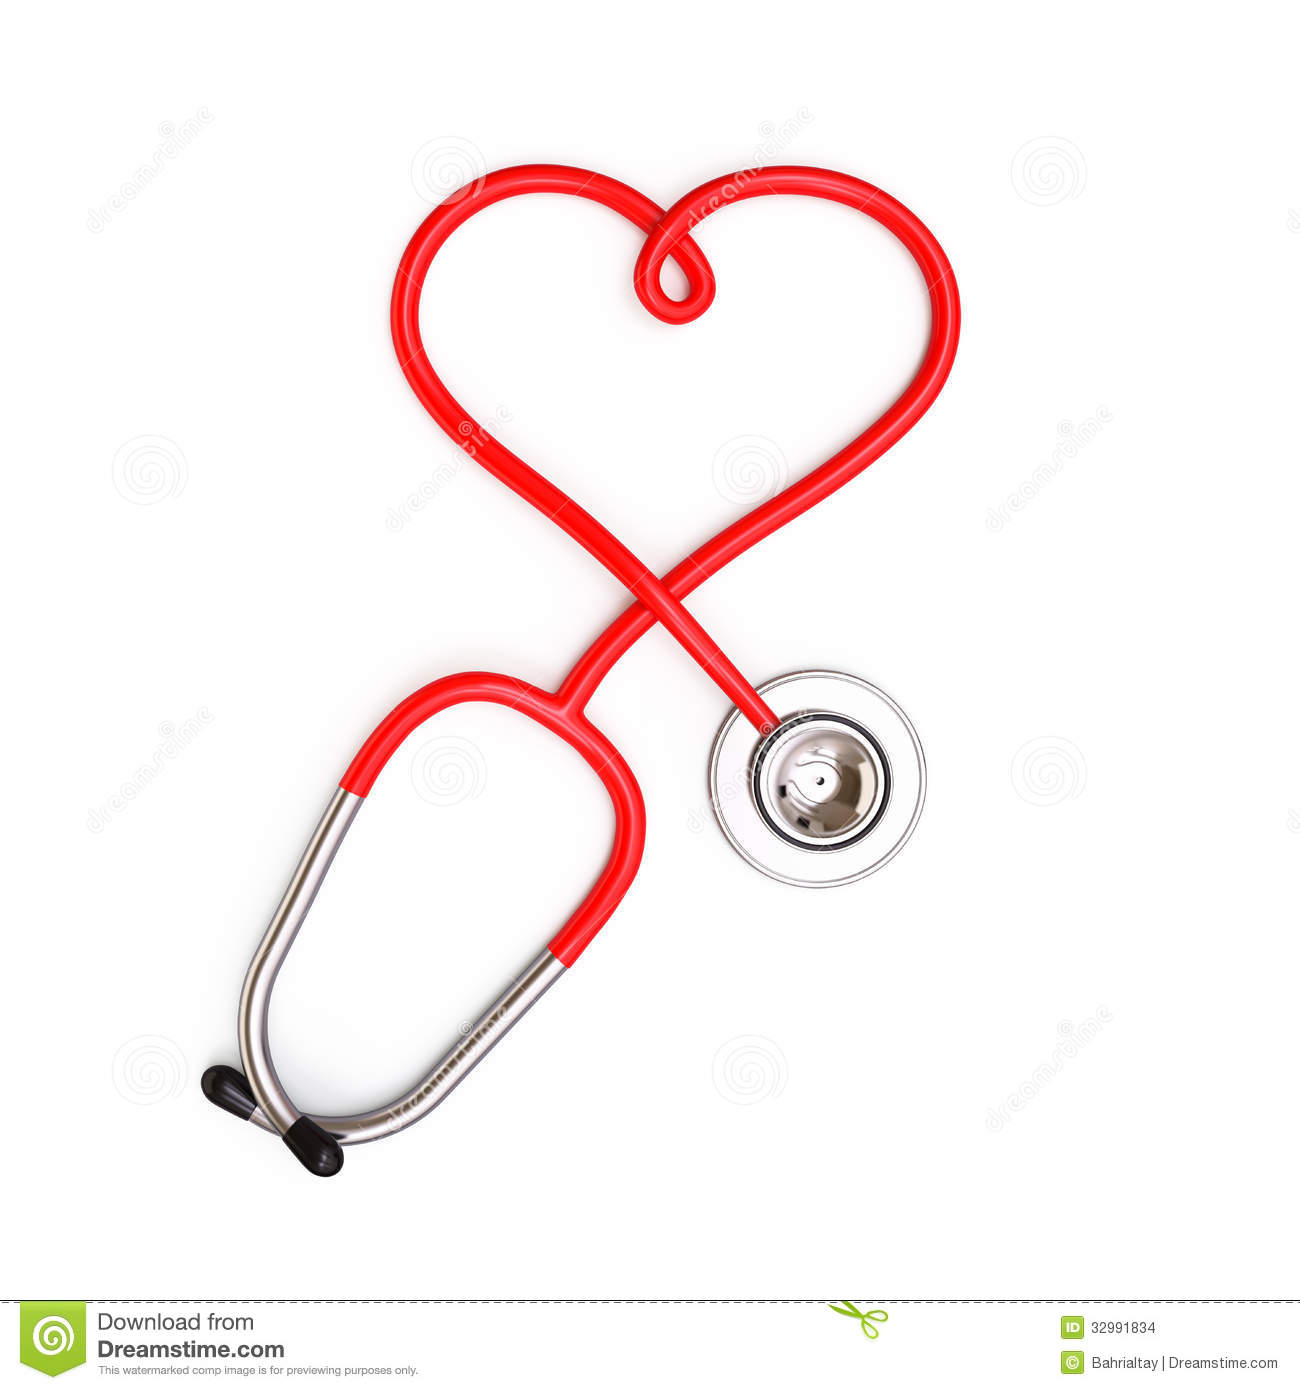 Heart Shape From Stethoscope On White Background  3d Render